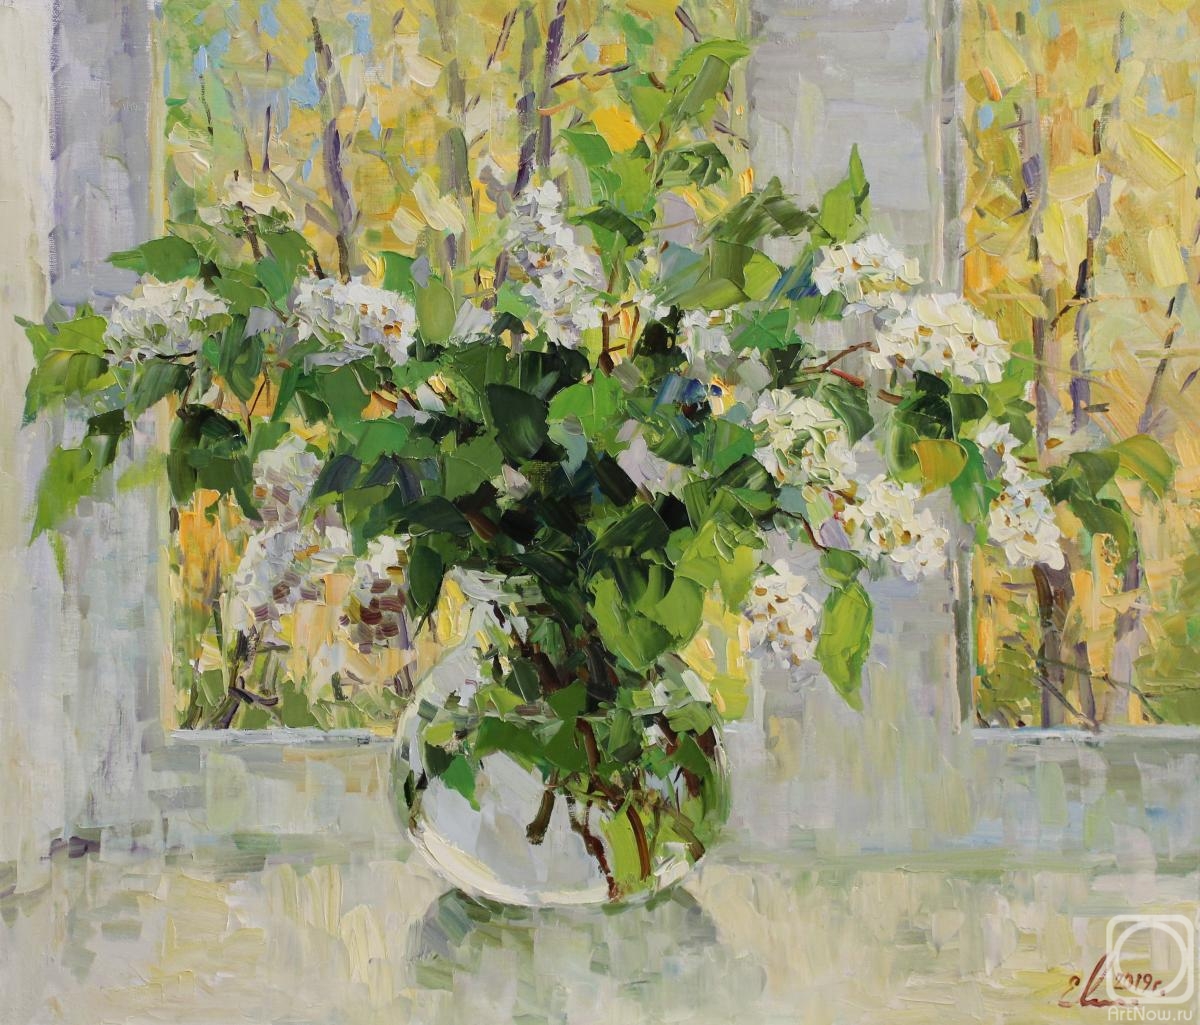 Malykh Evgeny. Bouquet of bird-cherry tree flowers